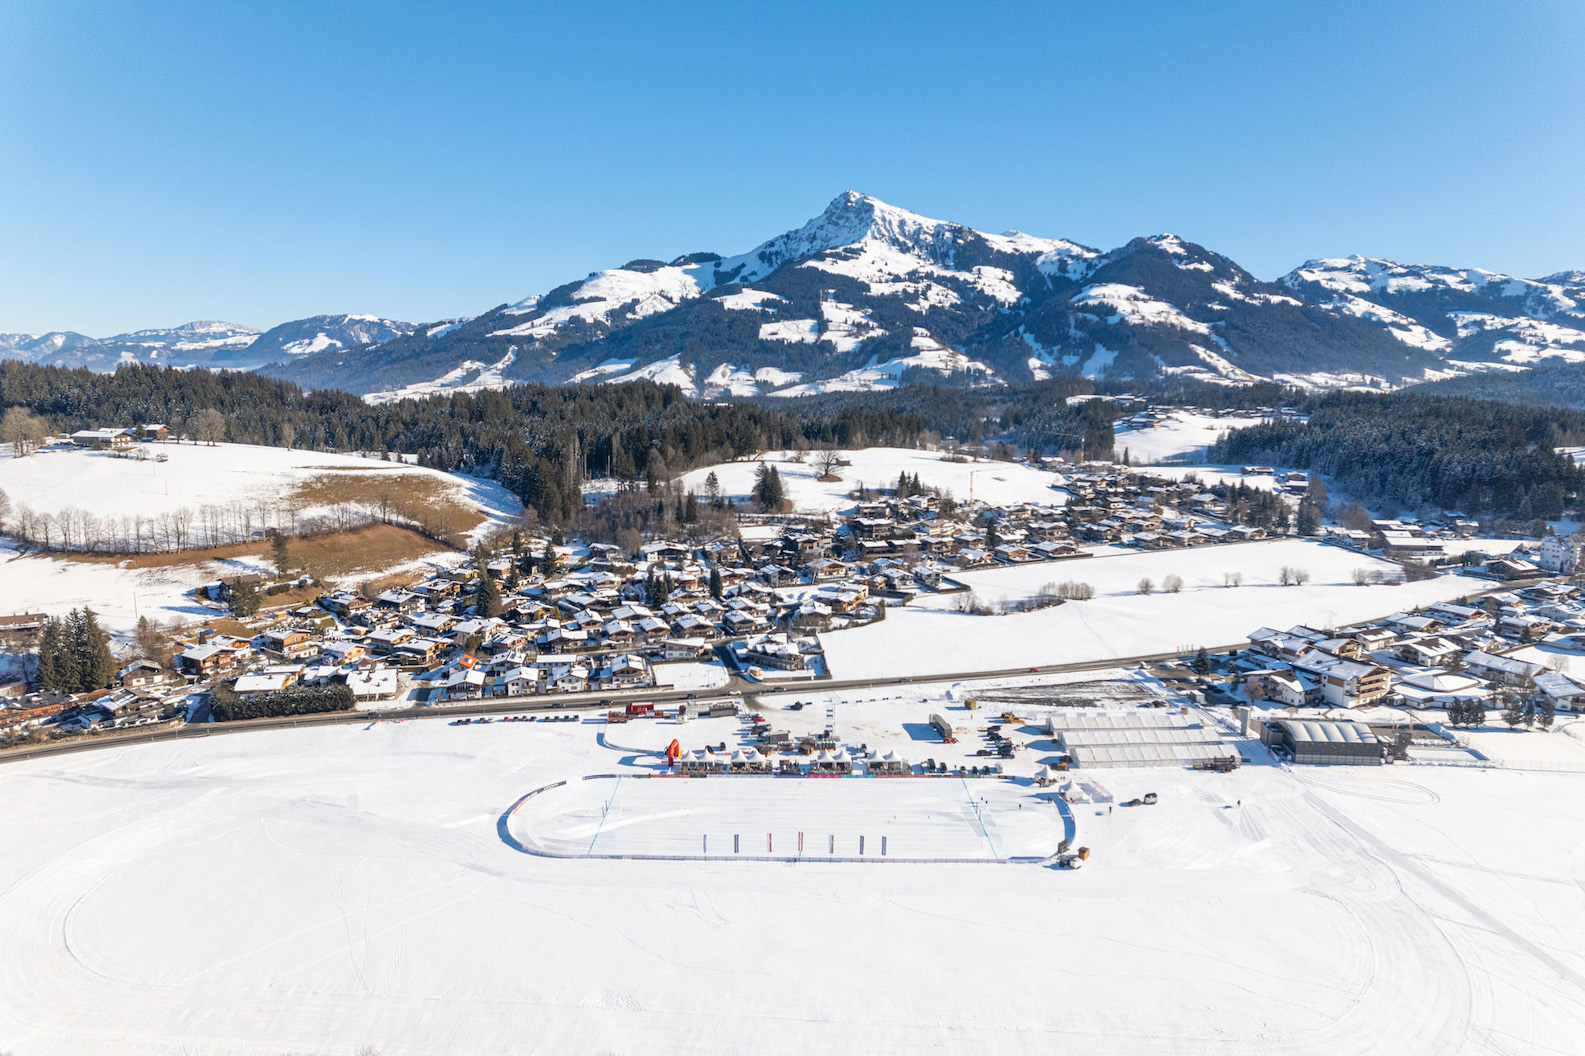 20. Bendura Bank Snow Polo World Cup Kitzbühel